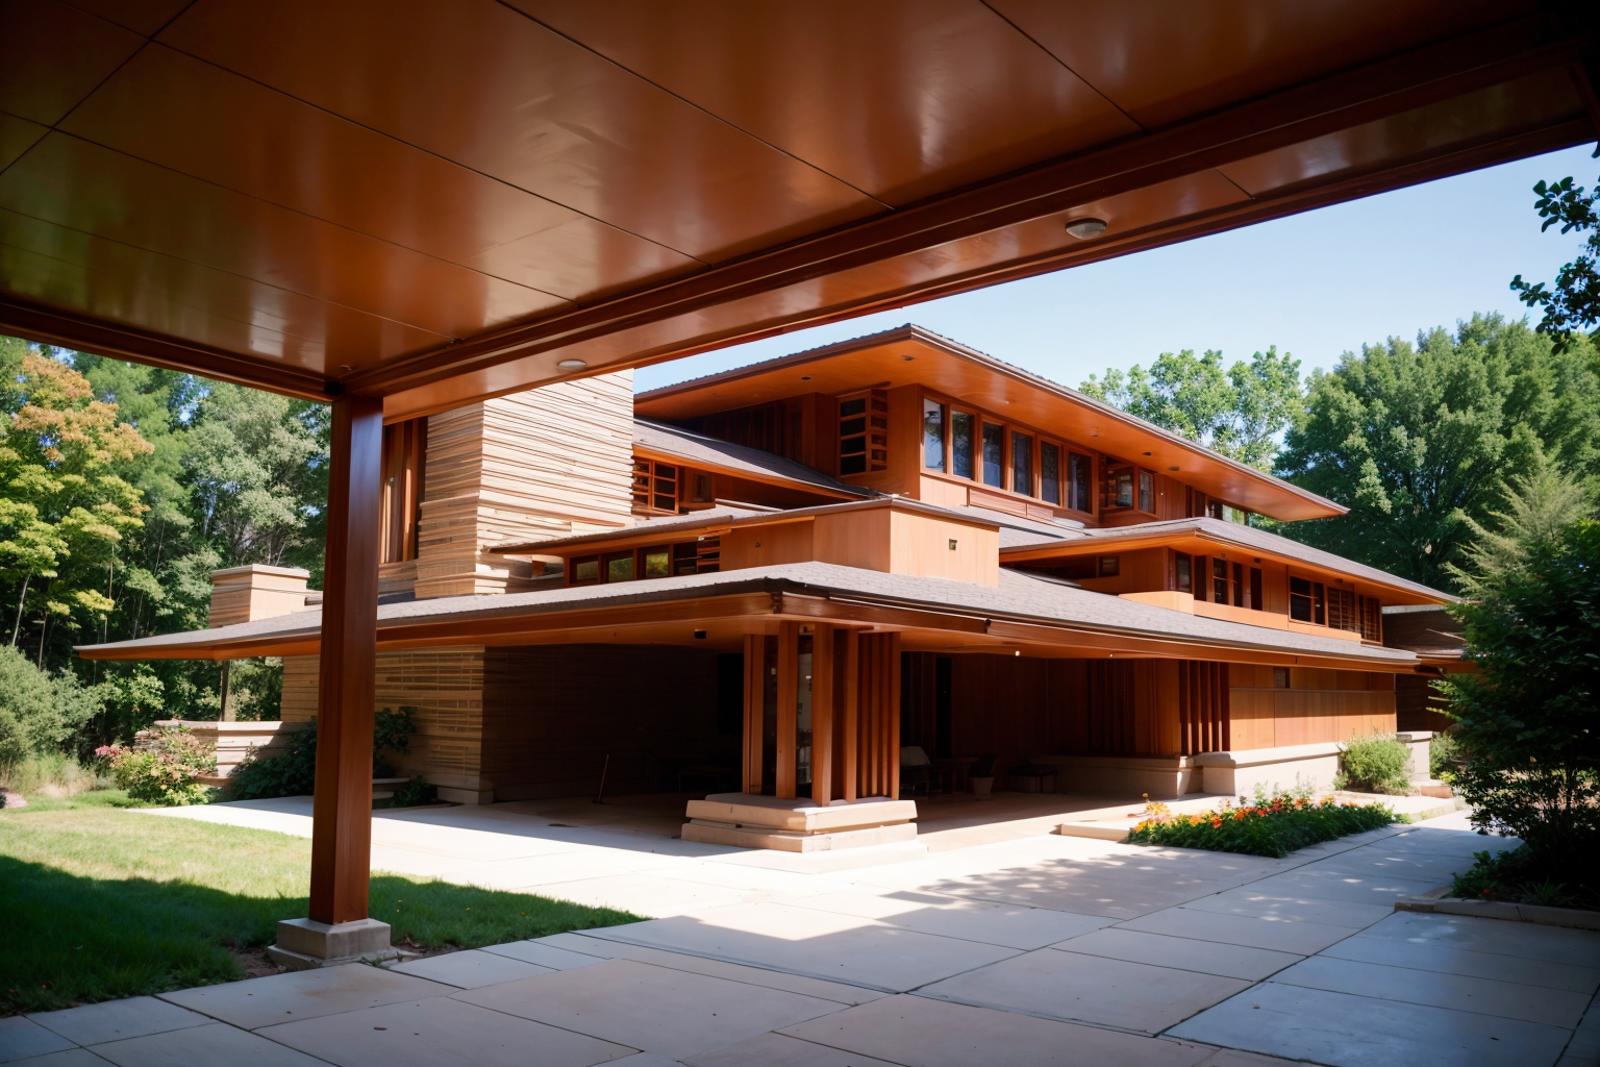 Frank Lloyd Wright Style Architecture image by thorenx1706632